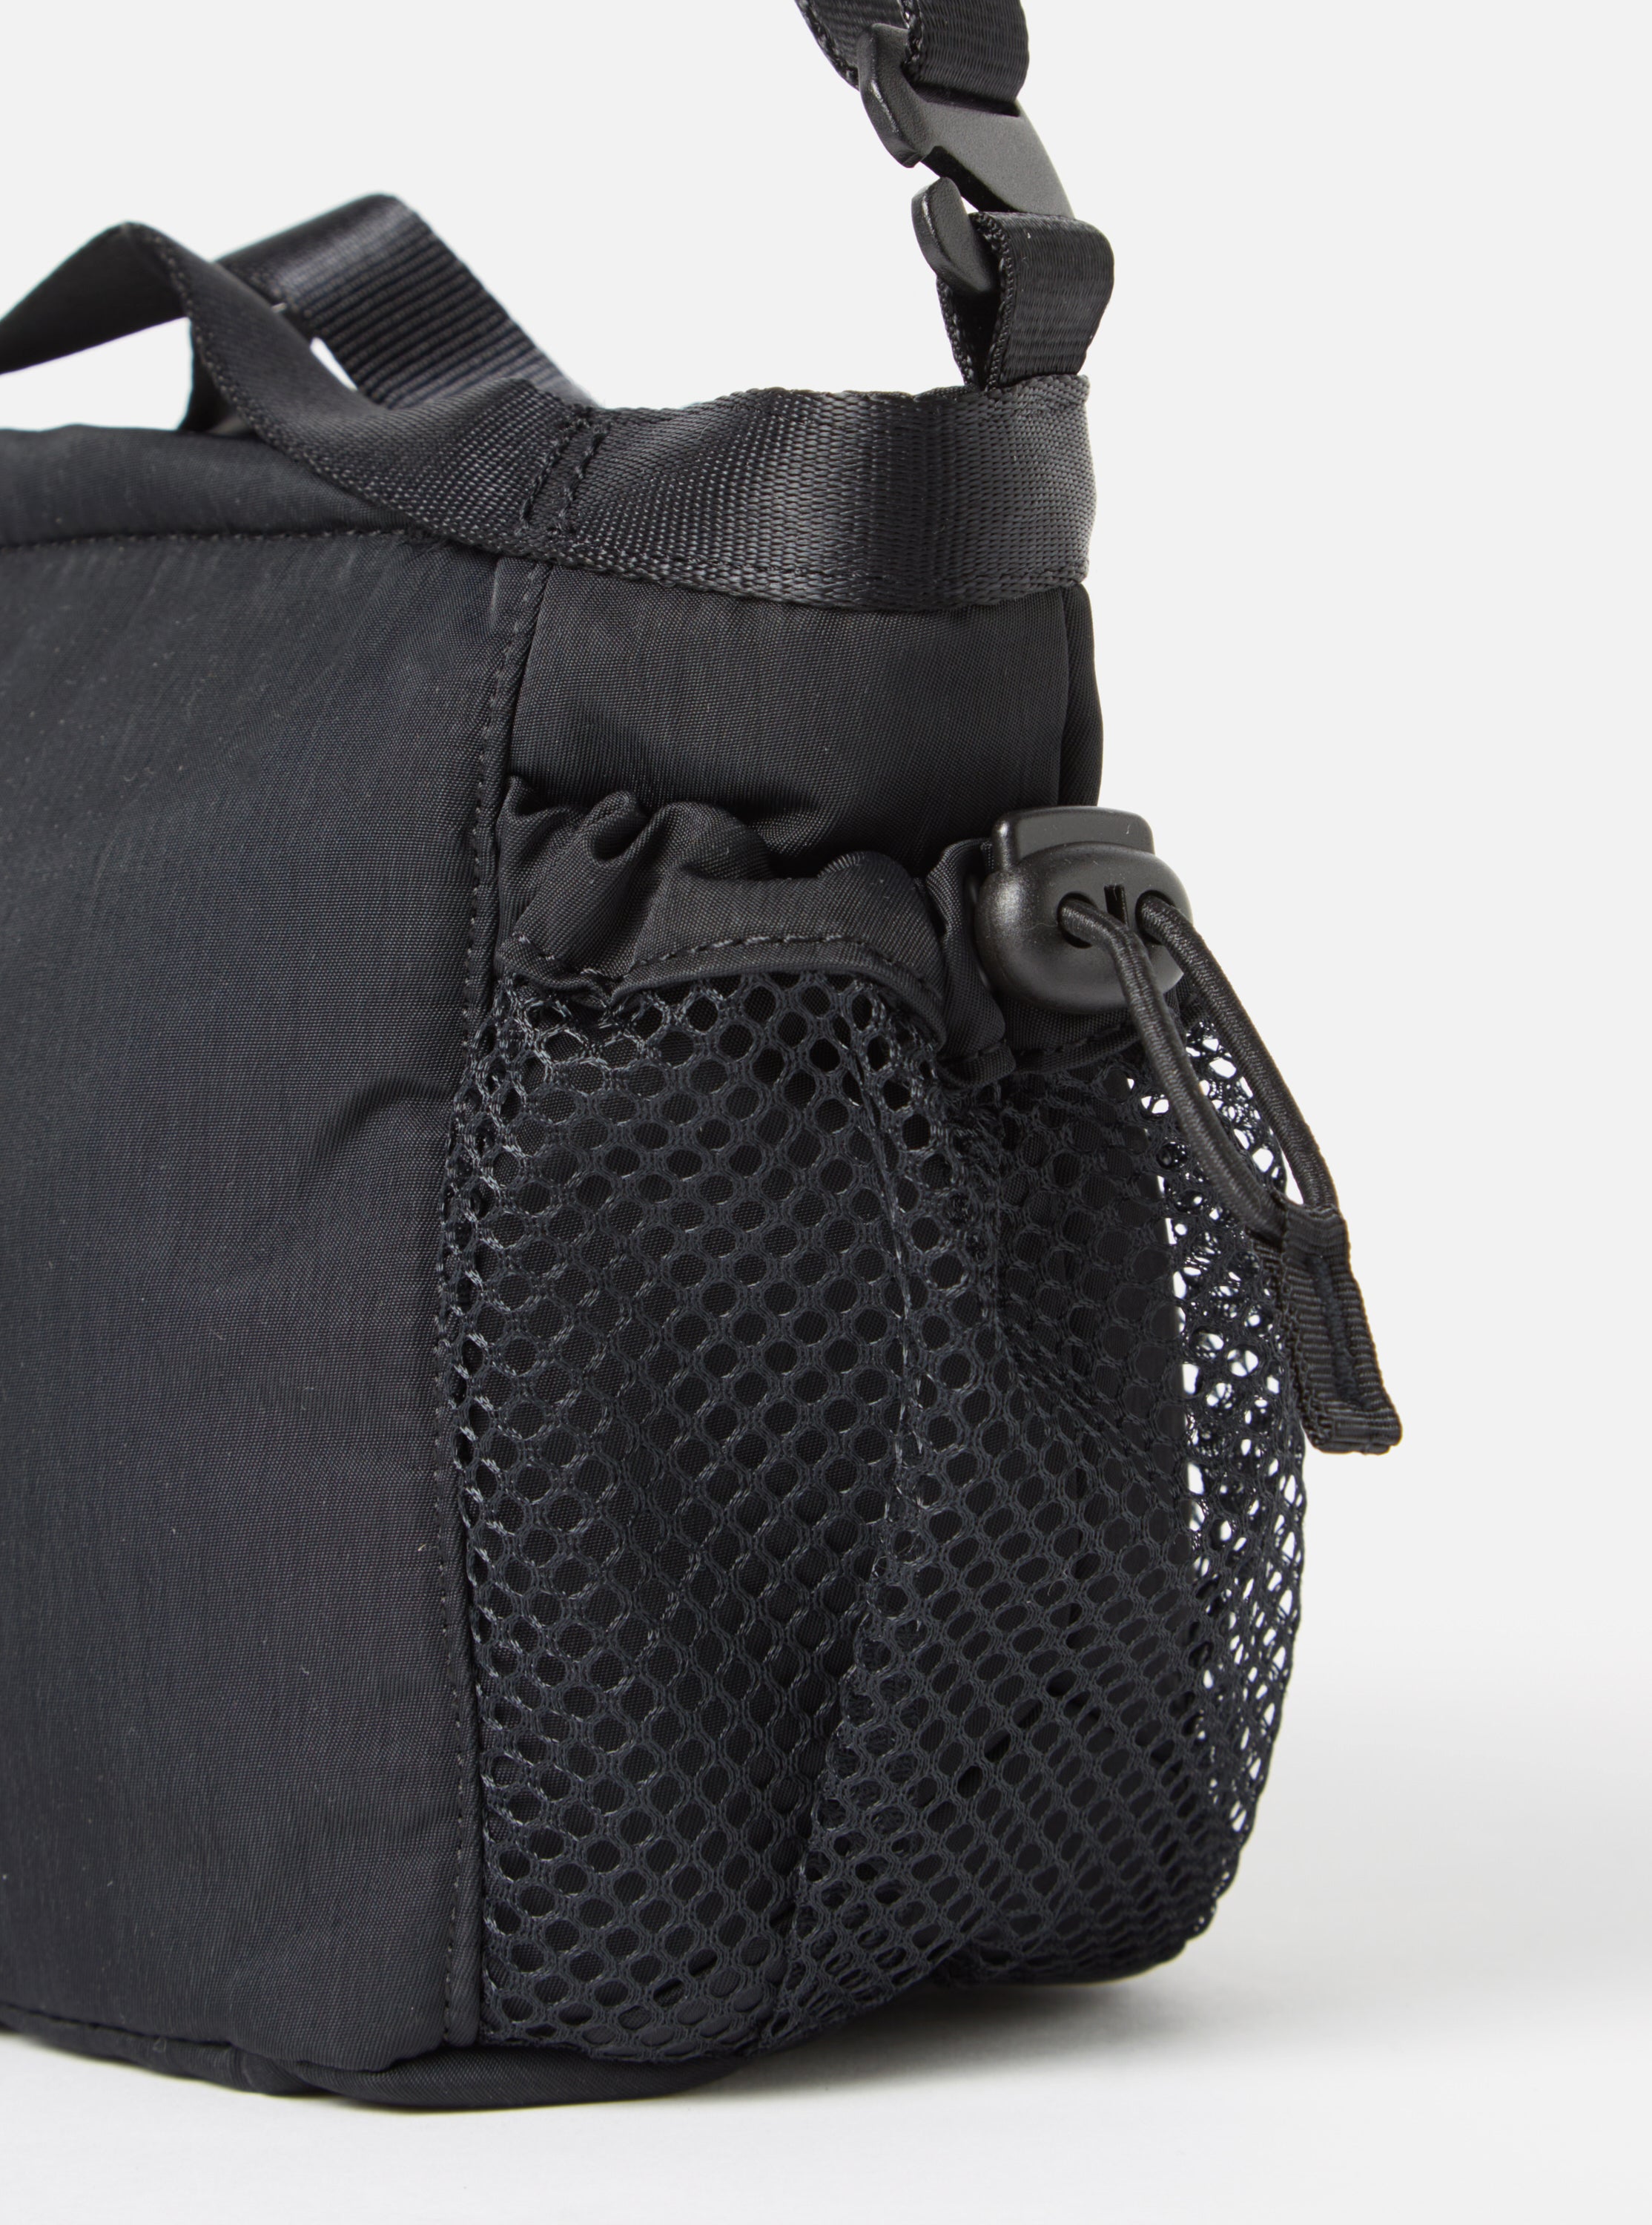 Sandqvist 'Stevie' Crossbody Bag in Black Recycled Nylon